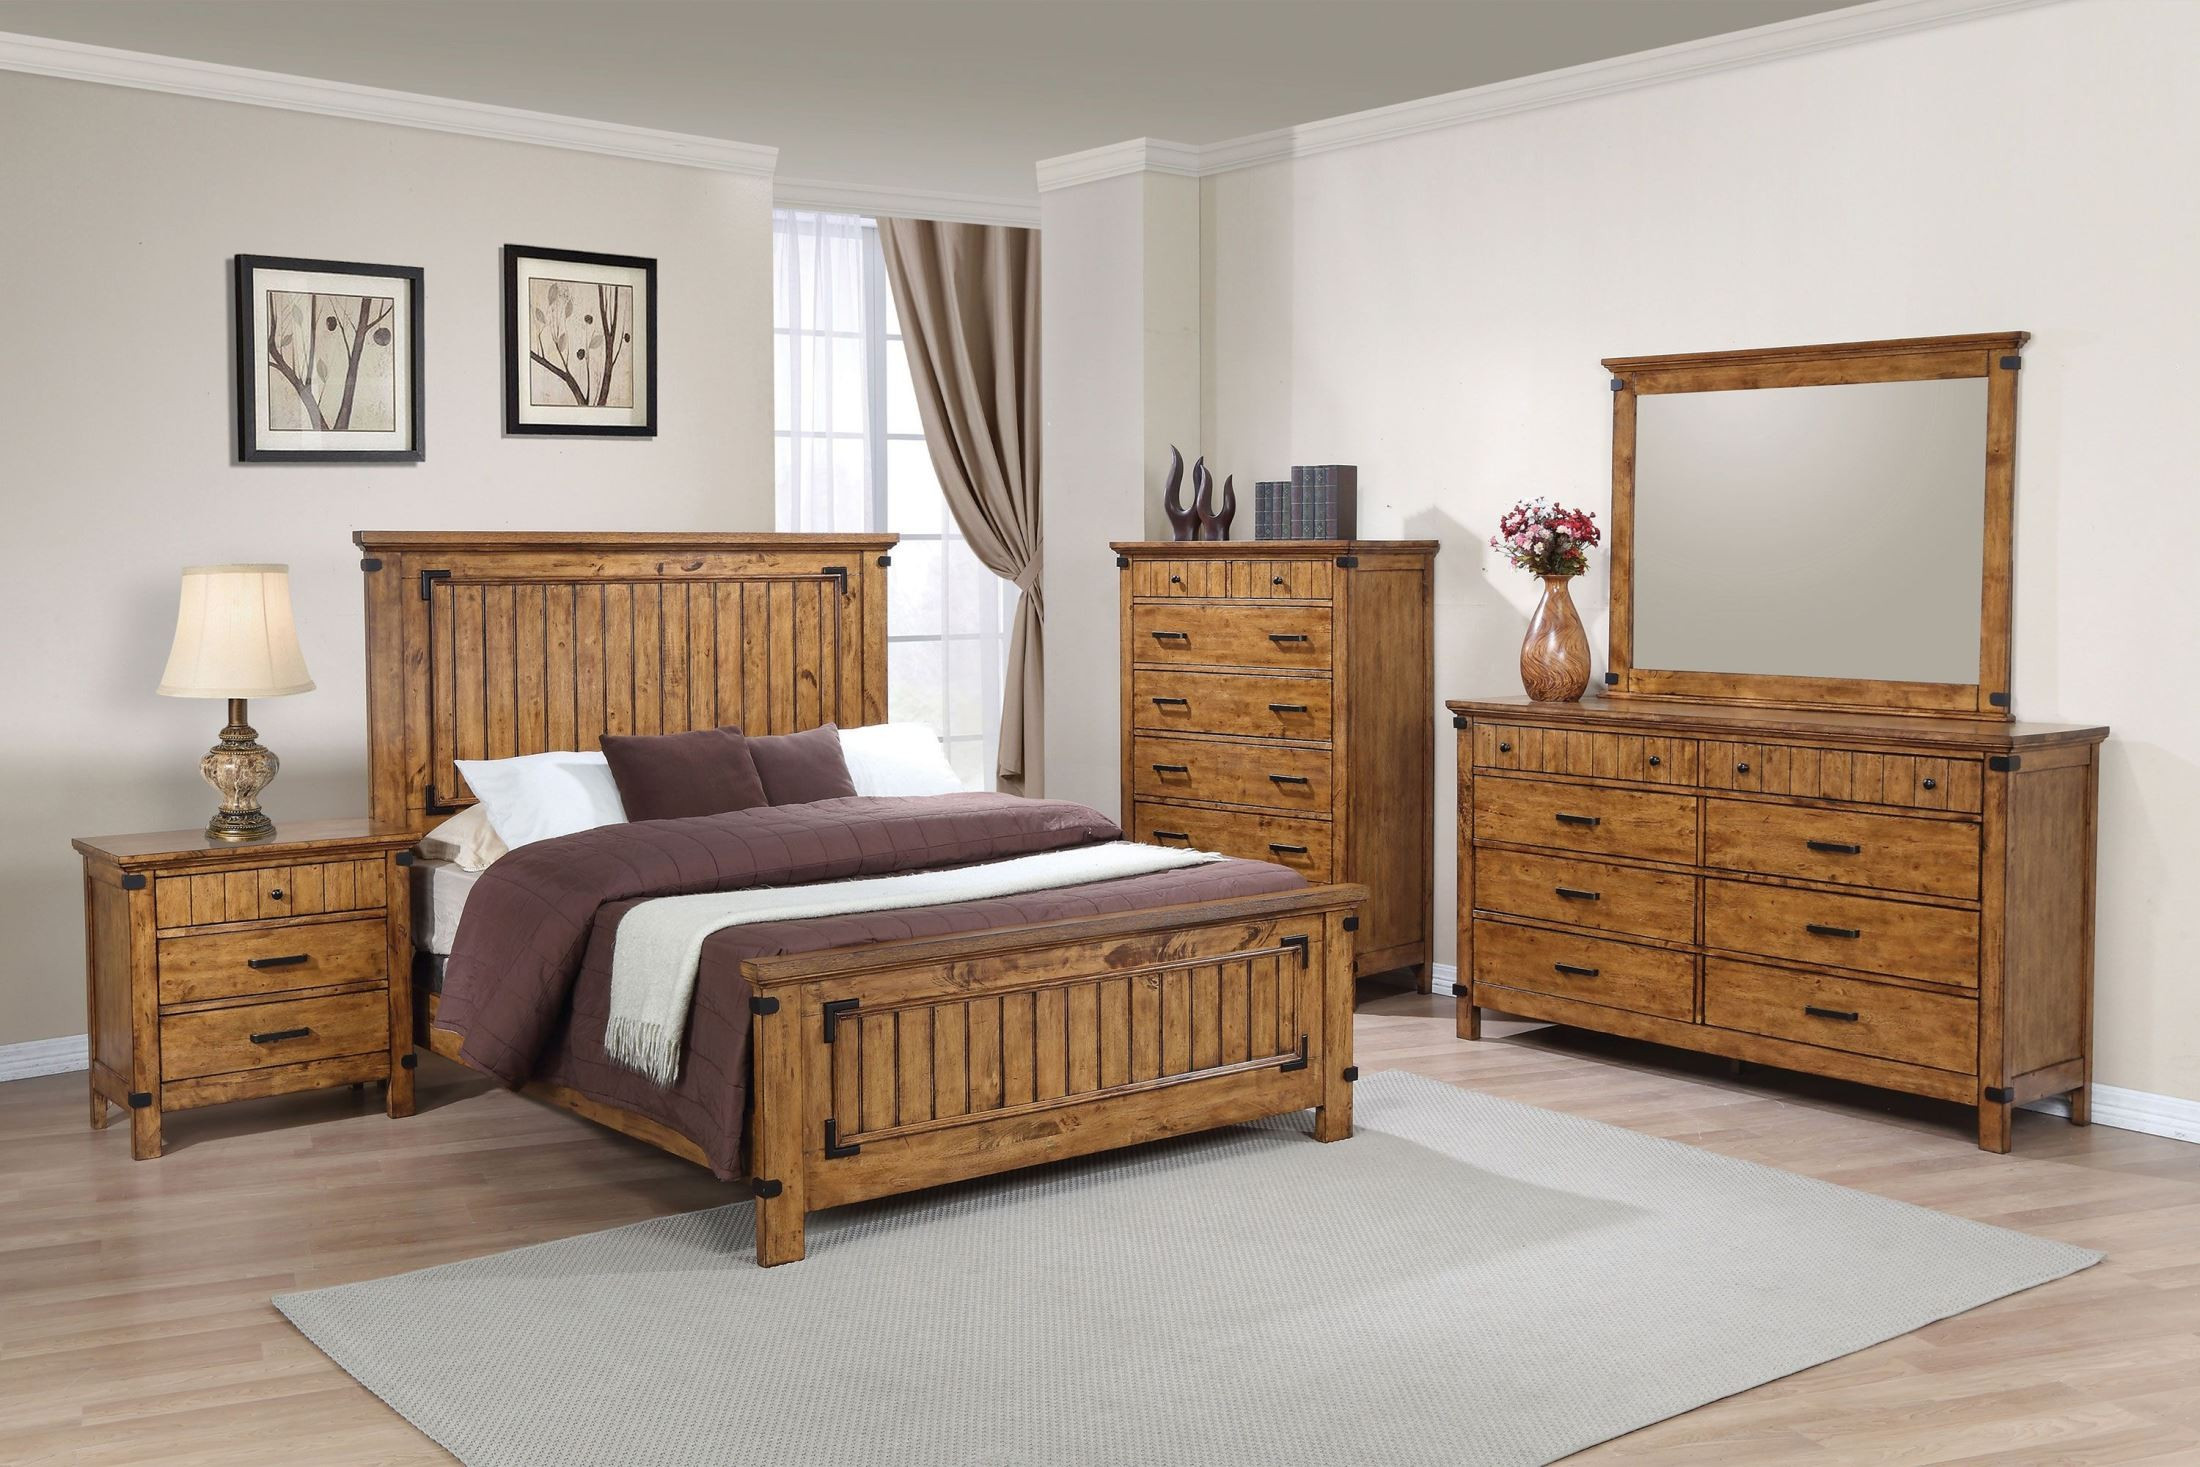 Rustic Bedroom Furniture
 Brenner Rustic Honey Panel Bedroom Set from Coaster